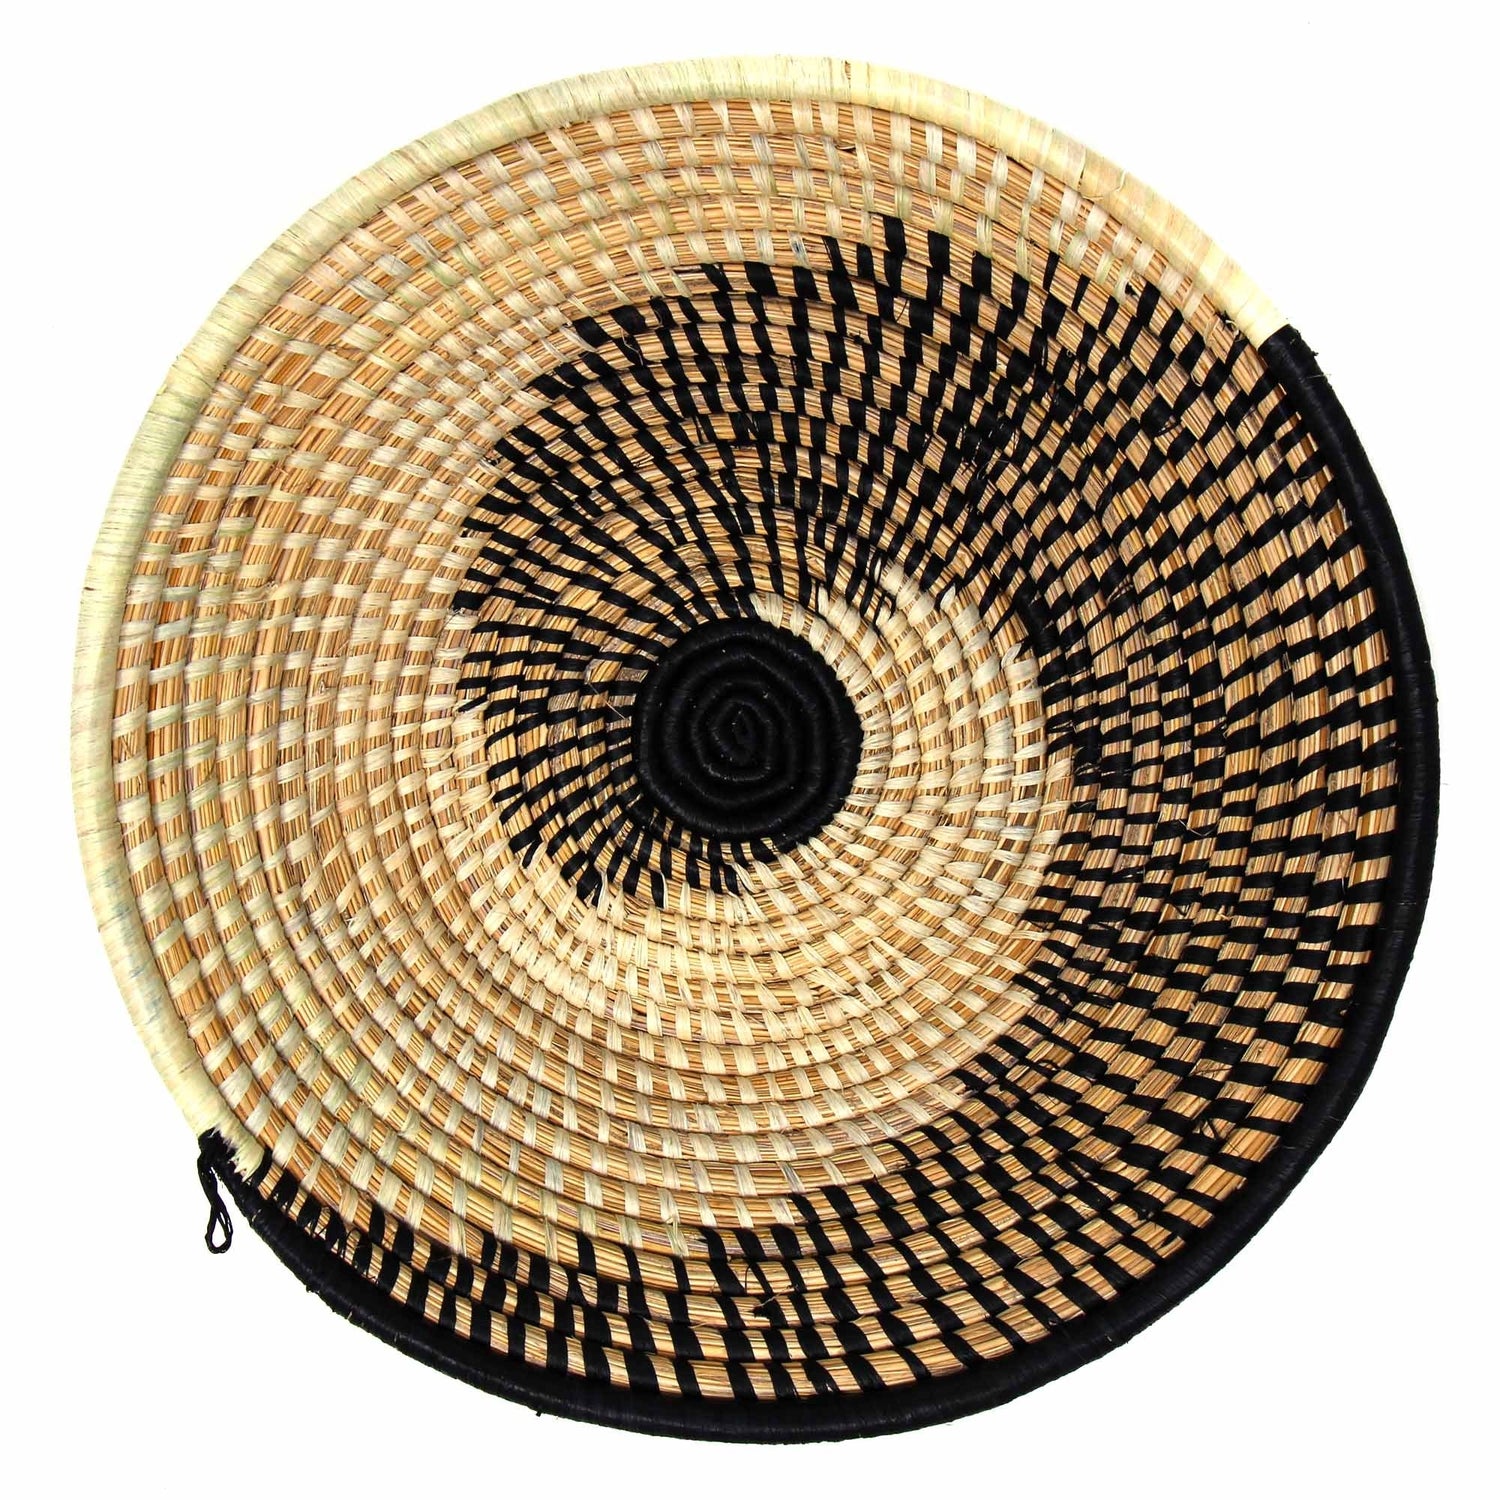 woven-sisal-fruit-basket-spiral-pattern-in-natural-black